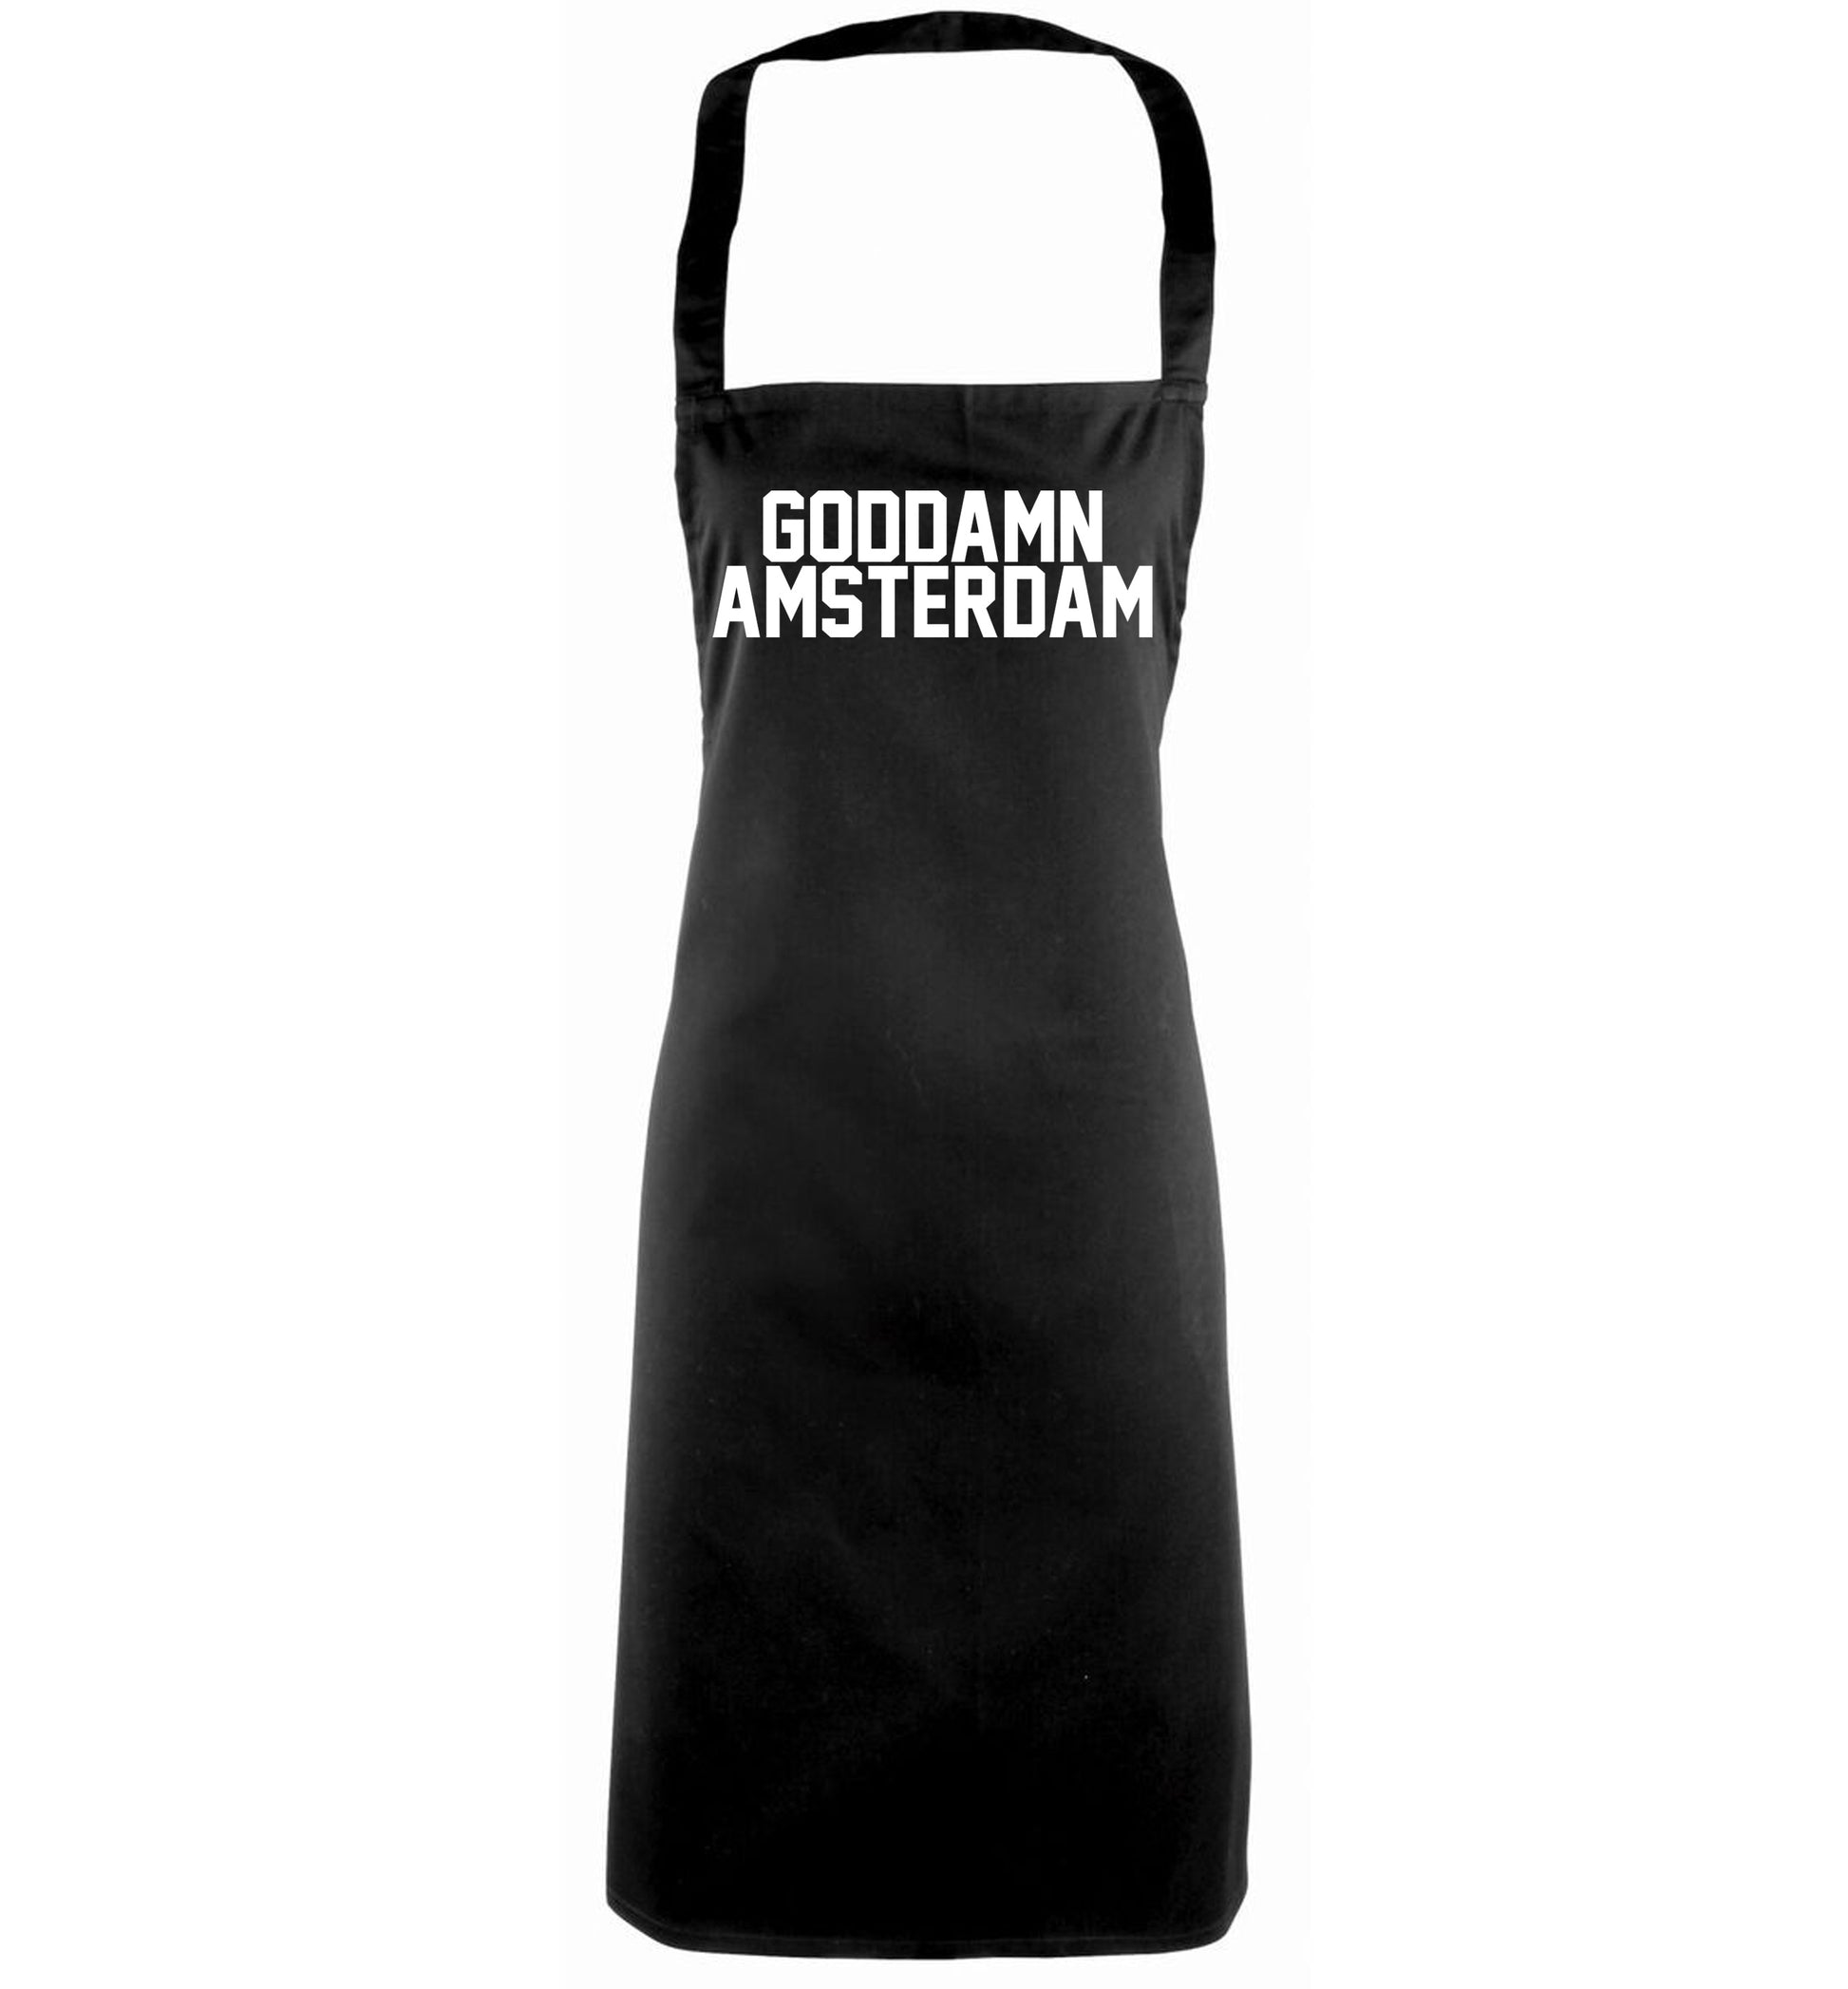 Goddamn Amsterdam black apron